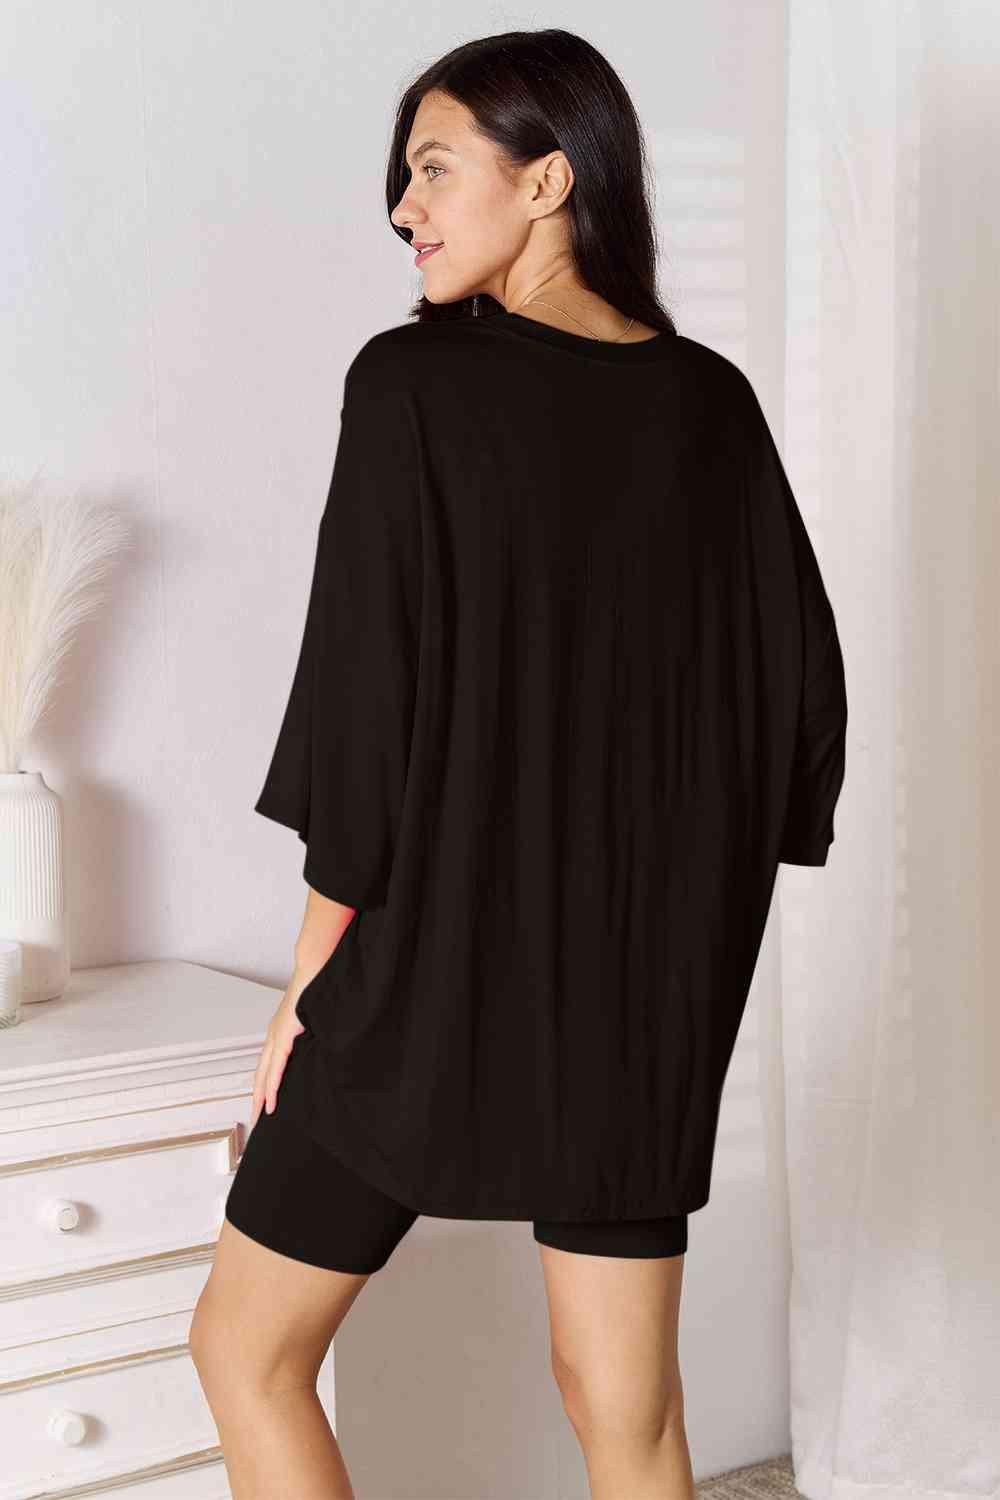 Basic Bae Full Size Soft Rayon Three-Quarter Sleeve Top and Shorts Set - AMIClubwear